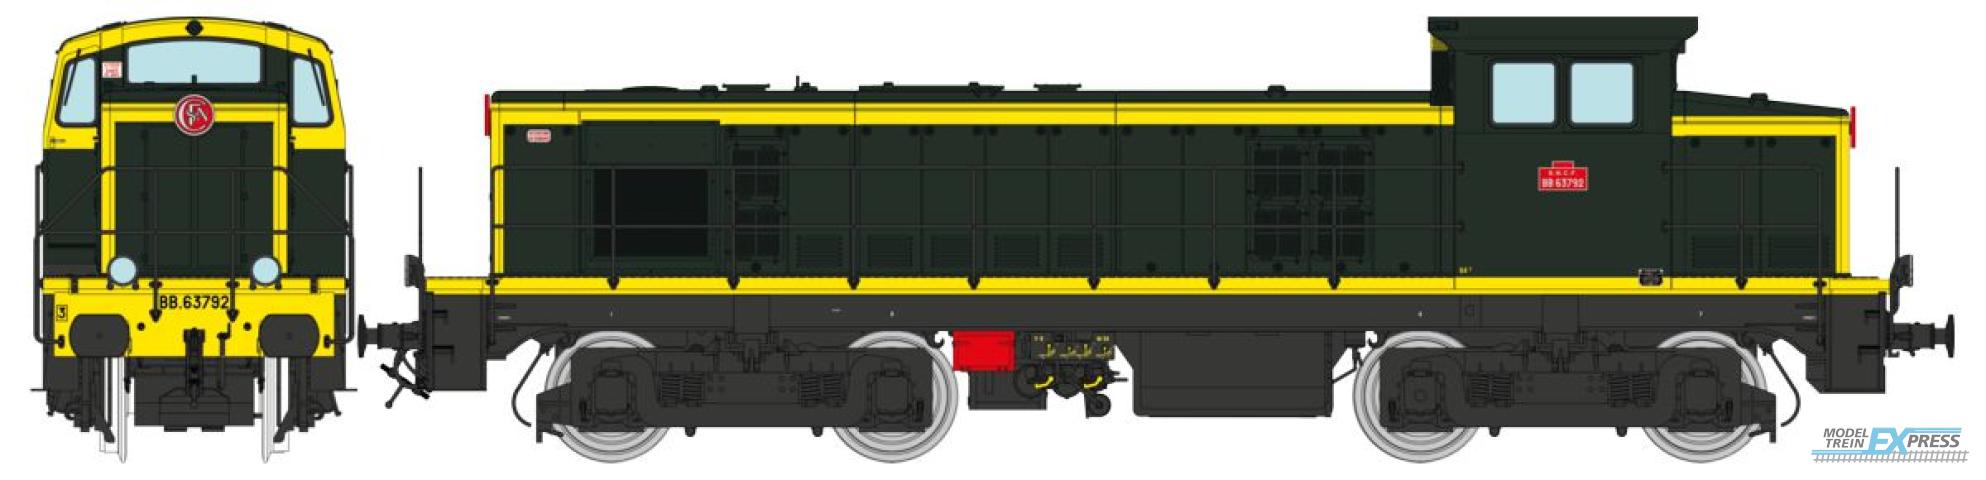 REE models JM-008SAC Diesel Locomotive BB 63792 green/yellow 401 black frame, West, Era  III - AC SOUND 3 Rails AC